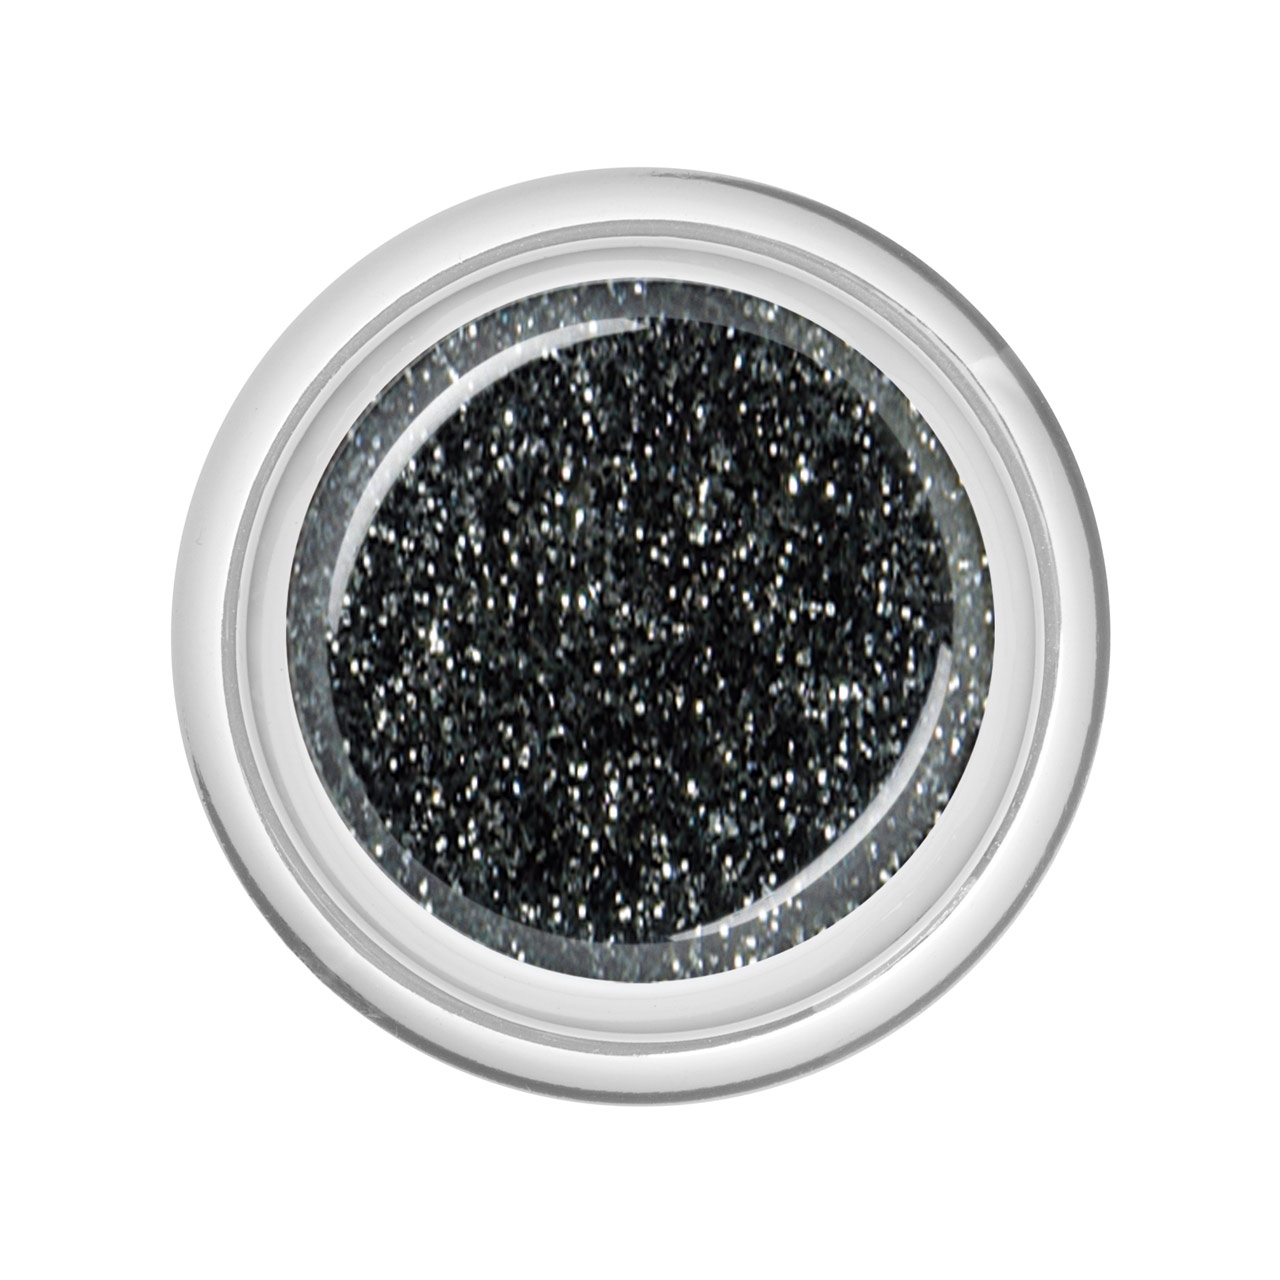 BAEHR BEAUTY CONCEPT - NAILS Colour-Gel Glitter Moon Light Black 5 ml